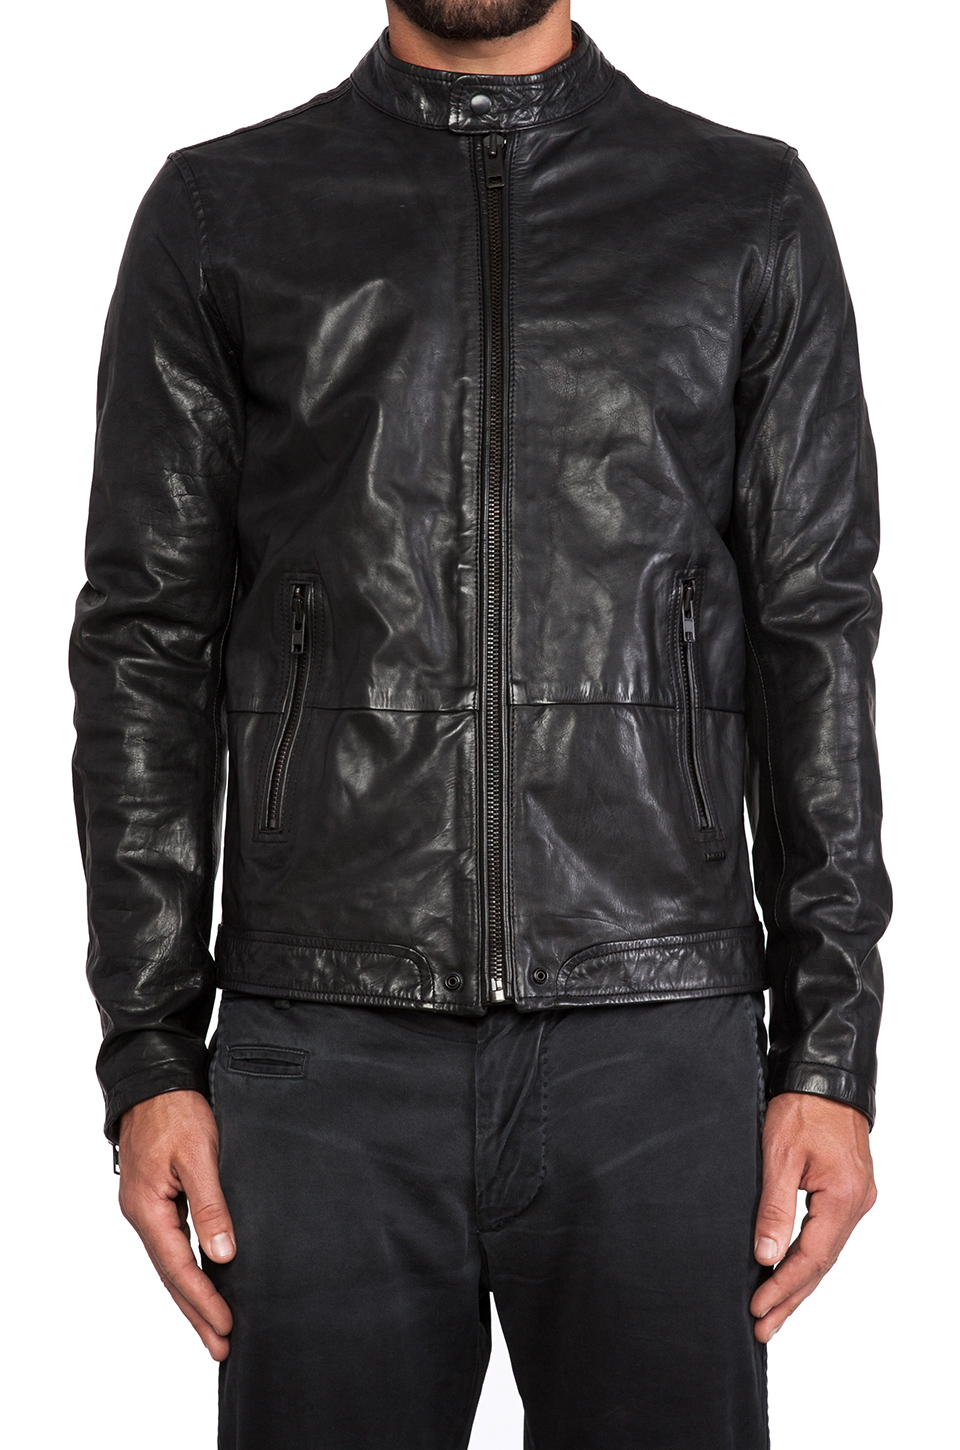 Lyst - Diesel Thermal Leather Jacket in Black for Men